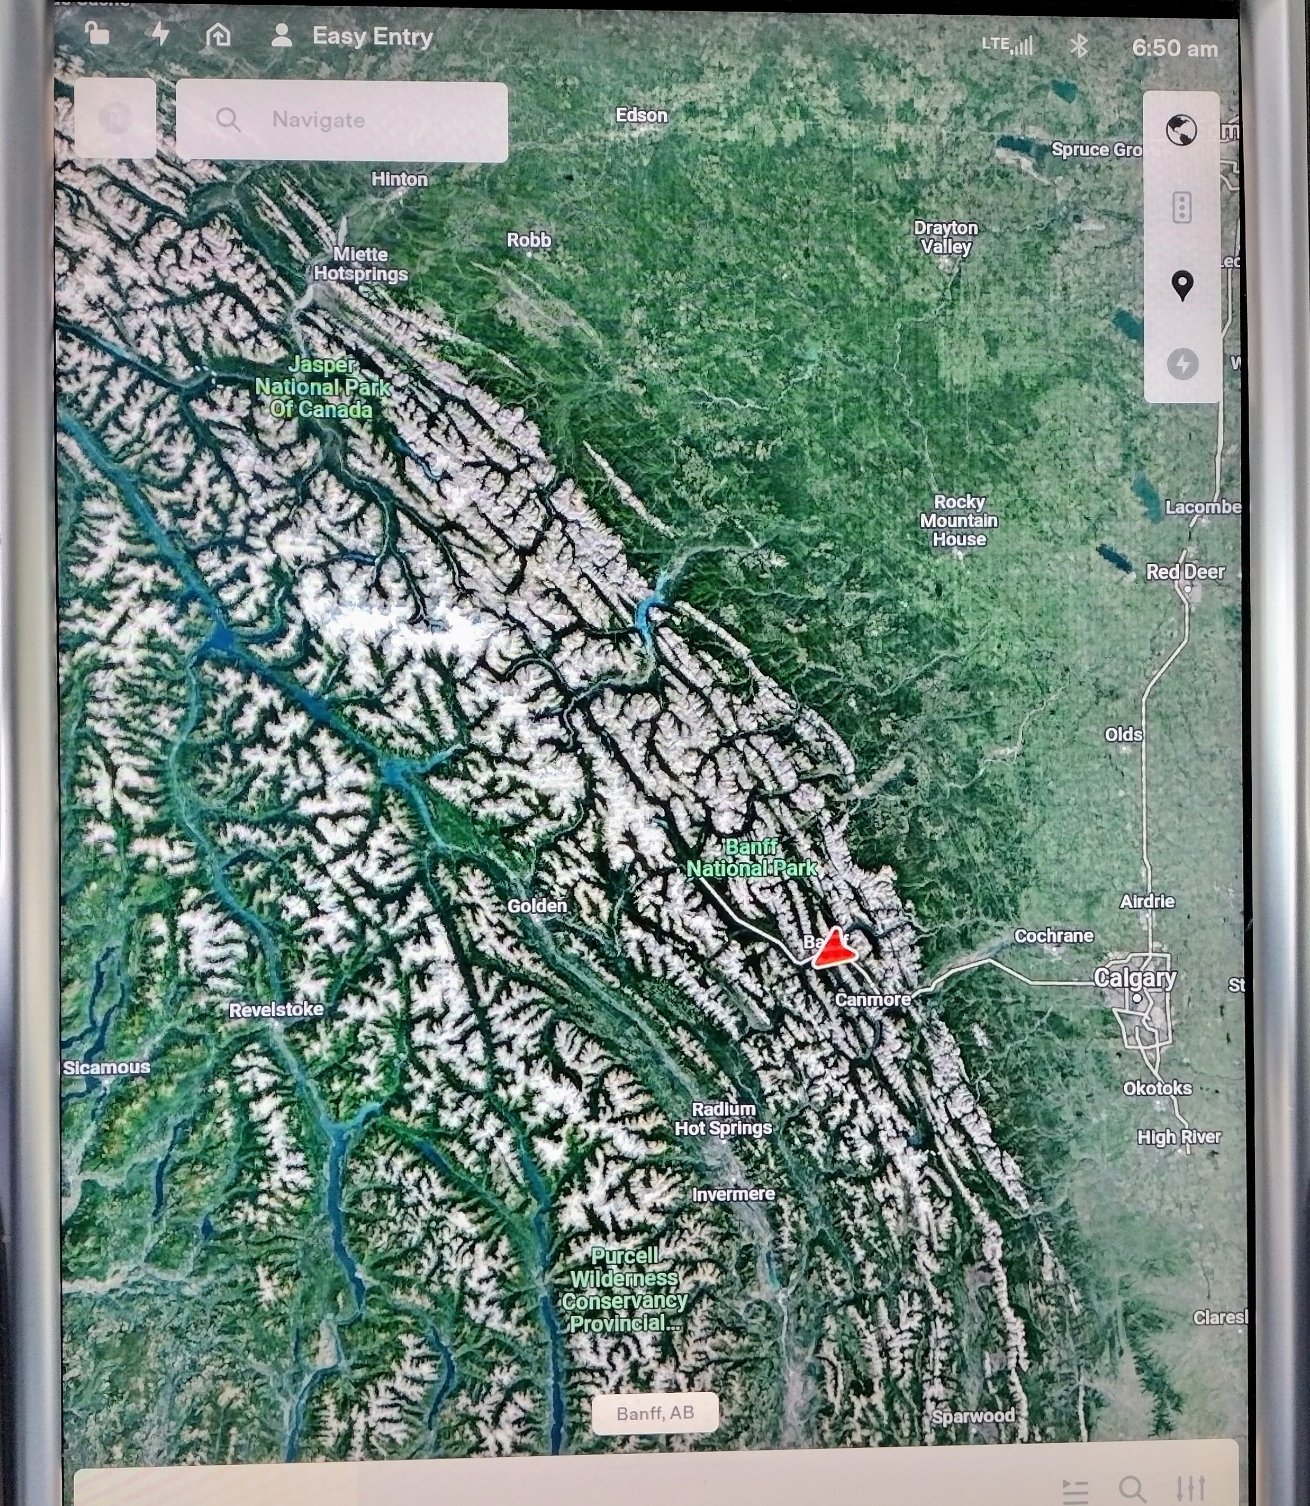 Banff region satellite view 20230511_055035729_HDR.jpg